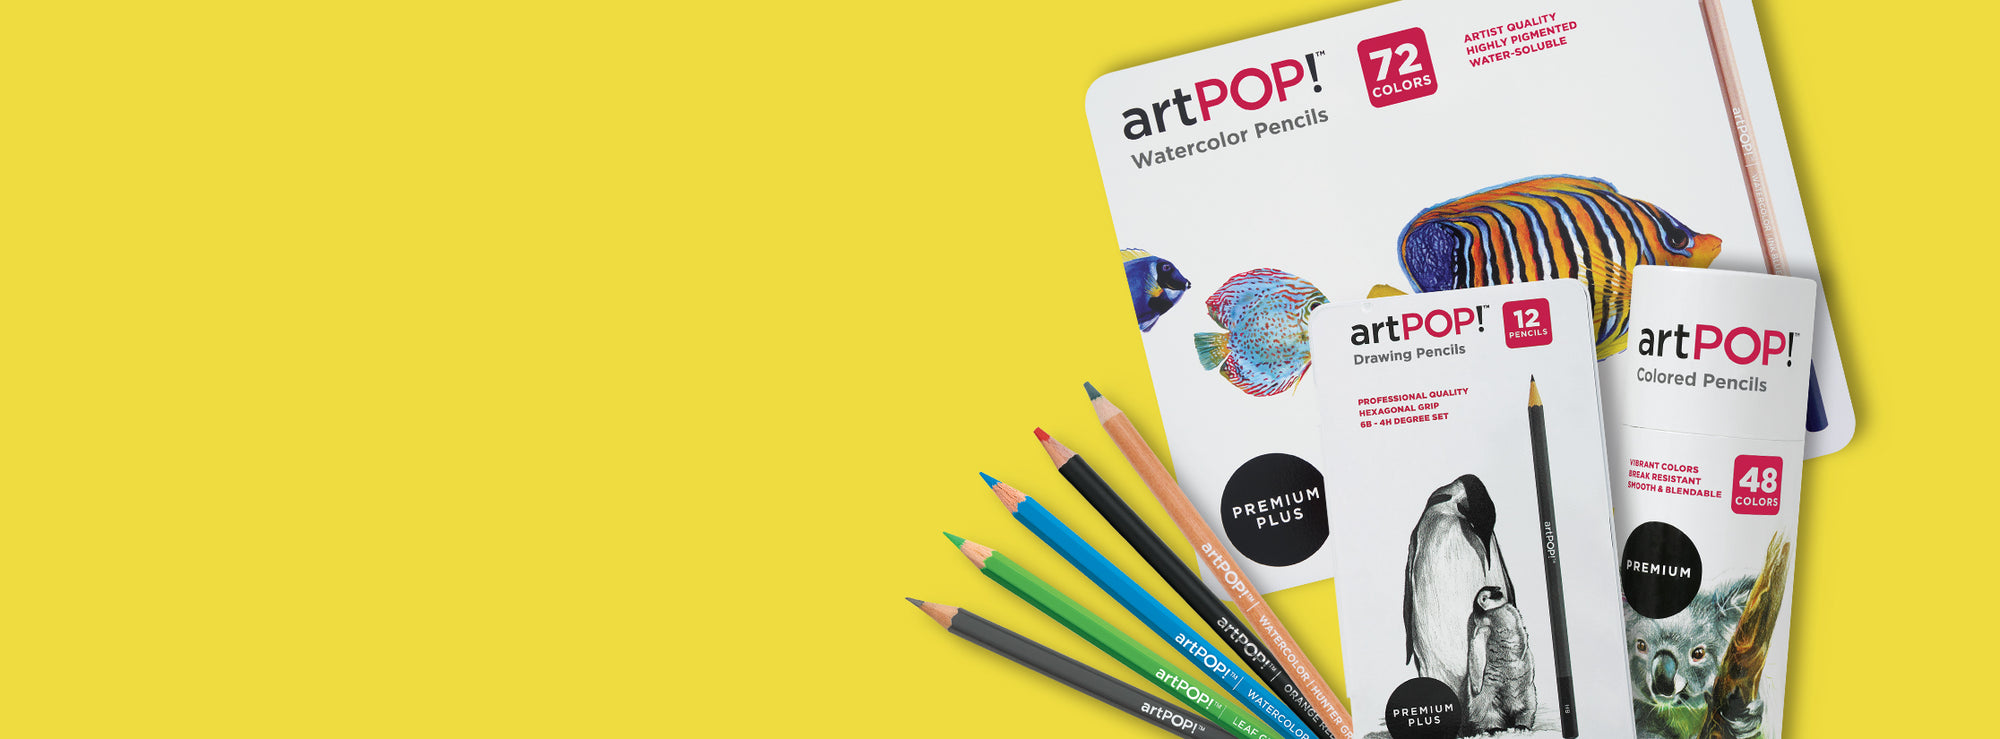 artPOP! Watercolor Pencils